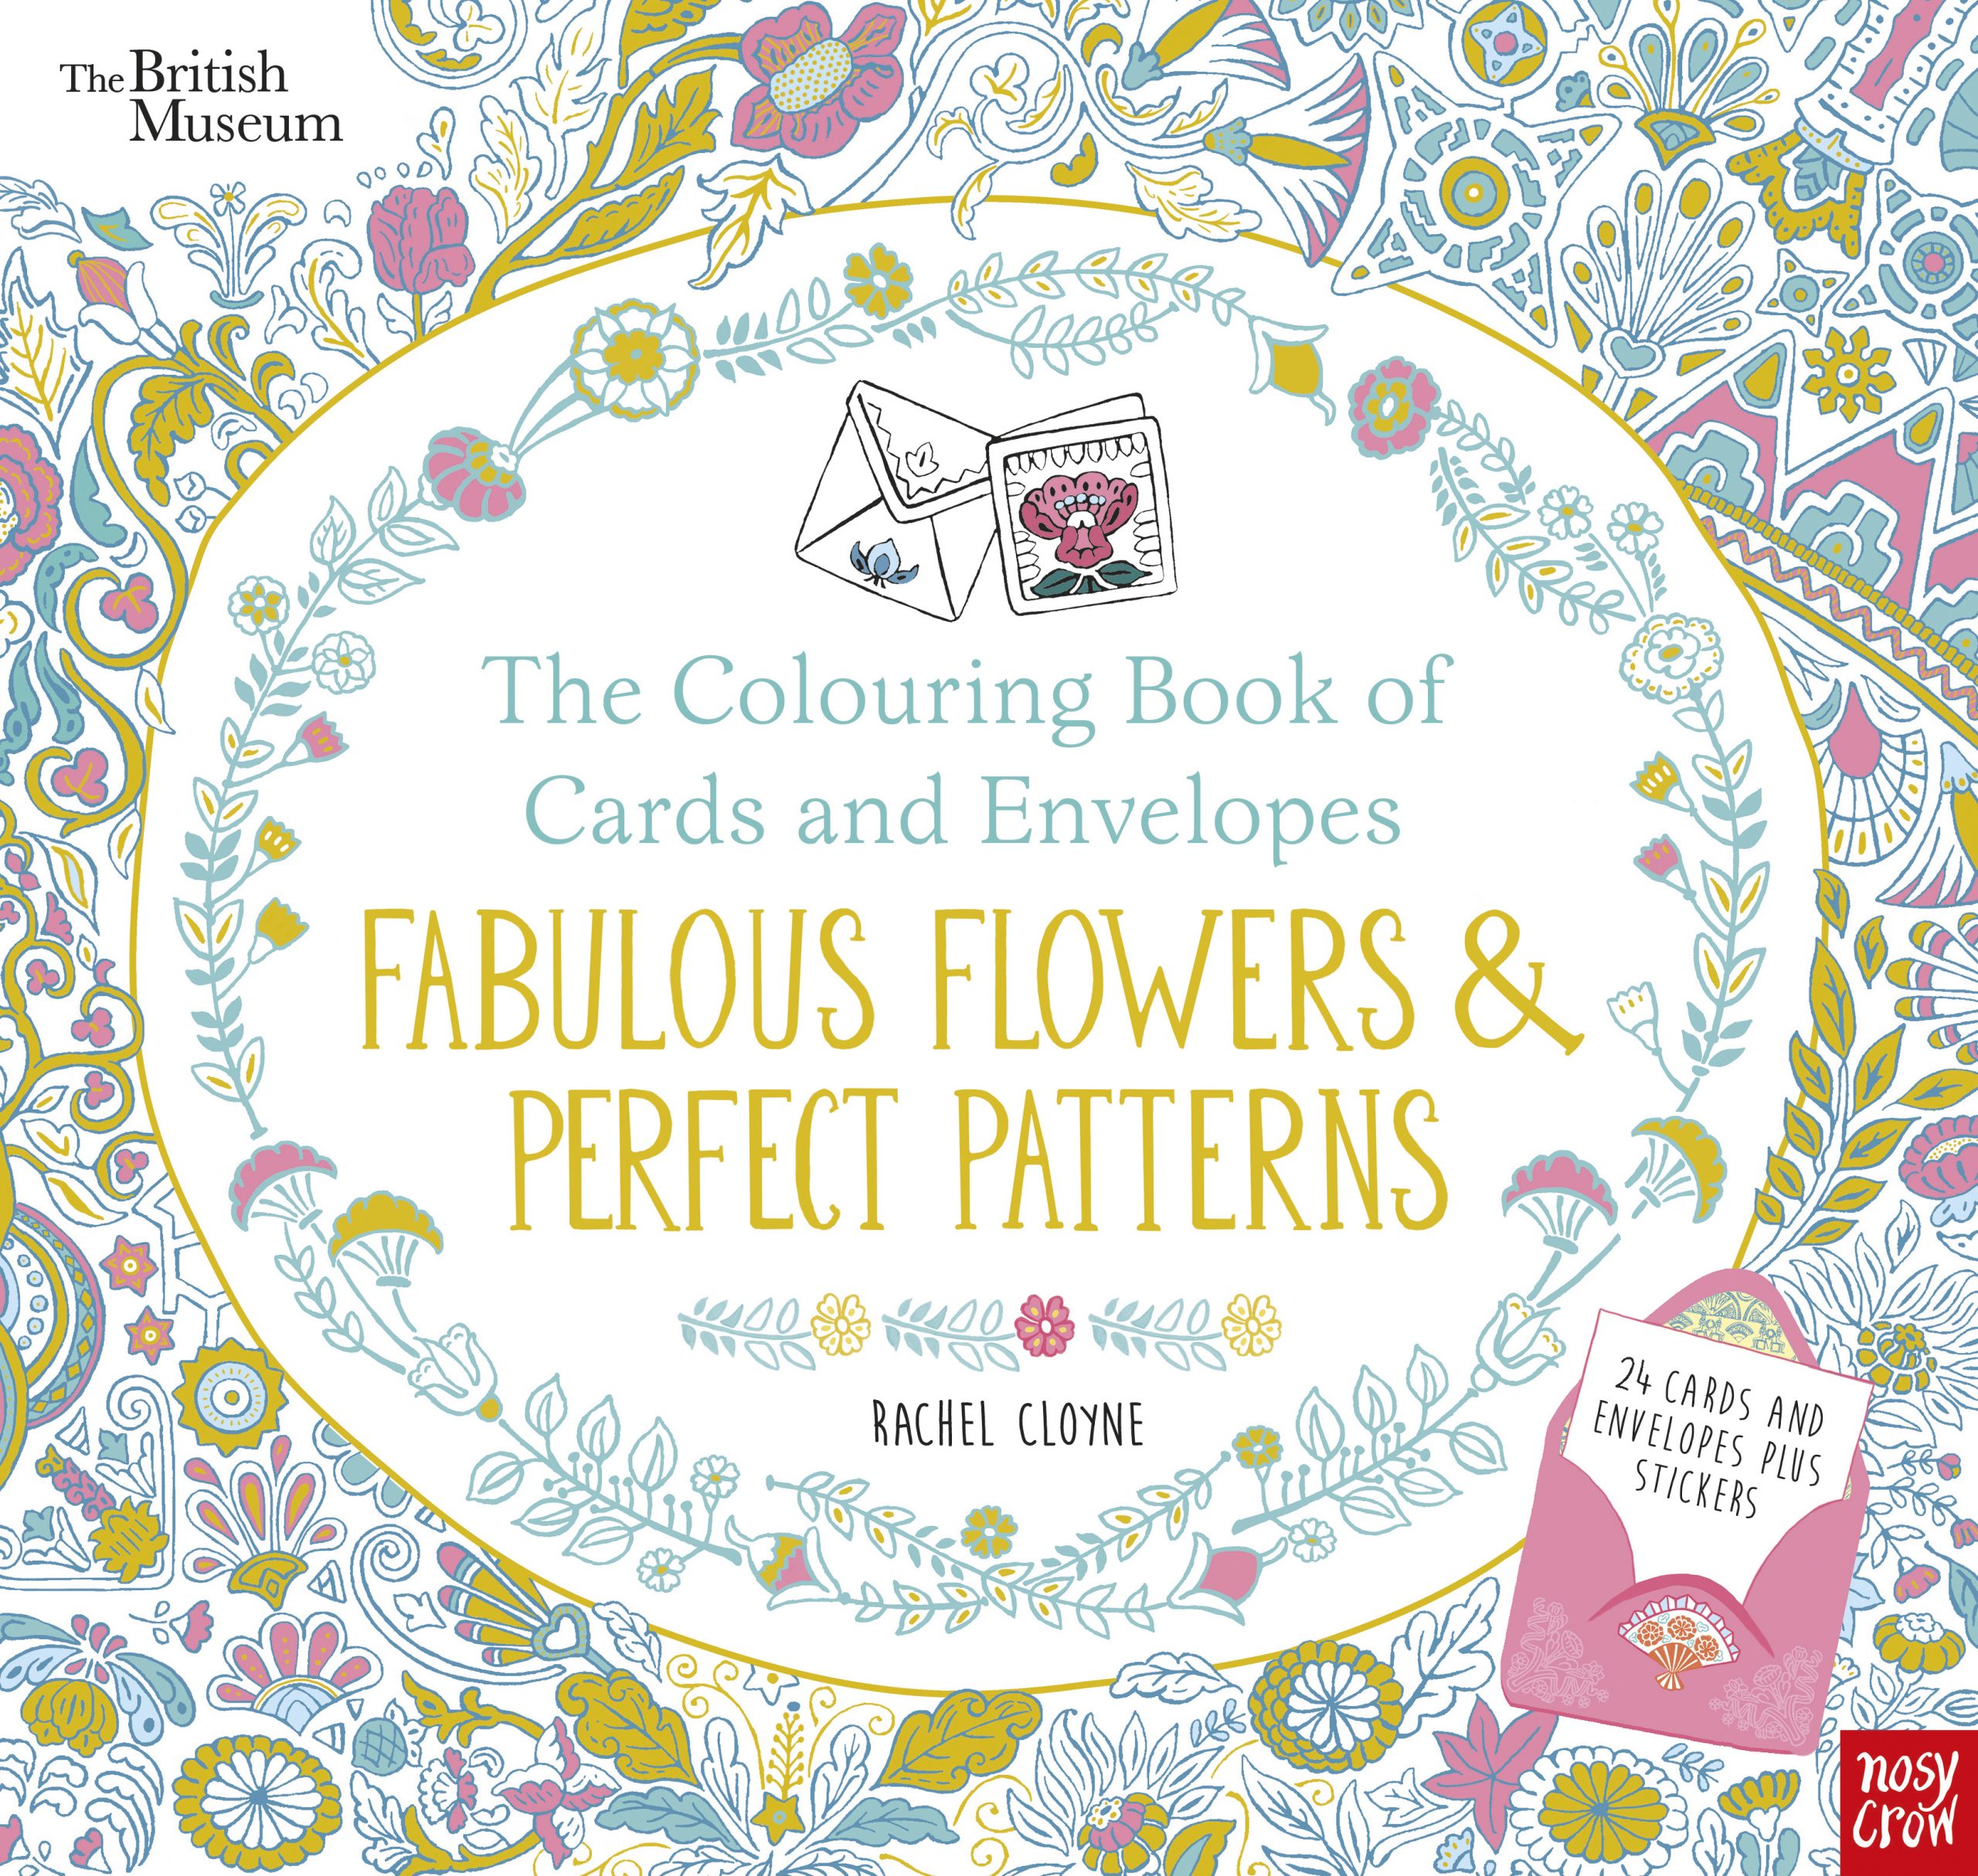 BM_ColouringBook_FabulousFlowers&PerfectPatterns_Cvr_web